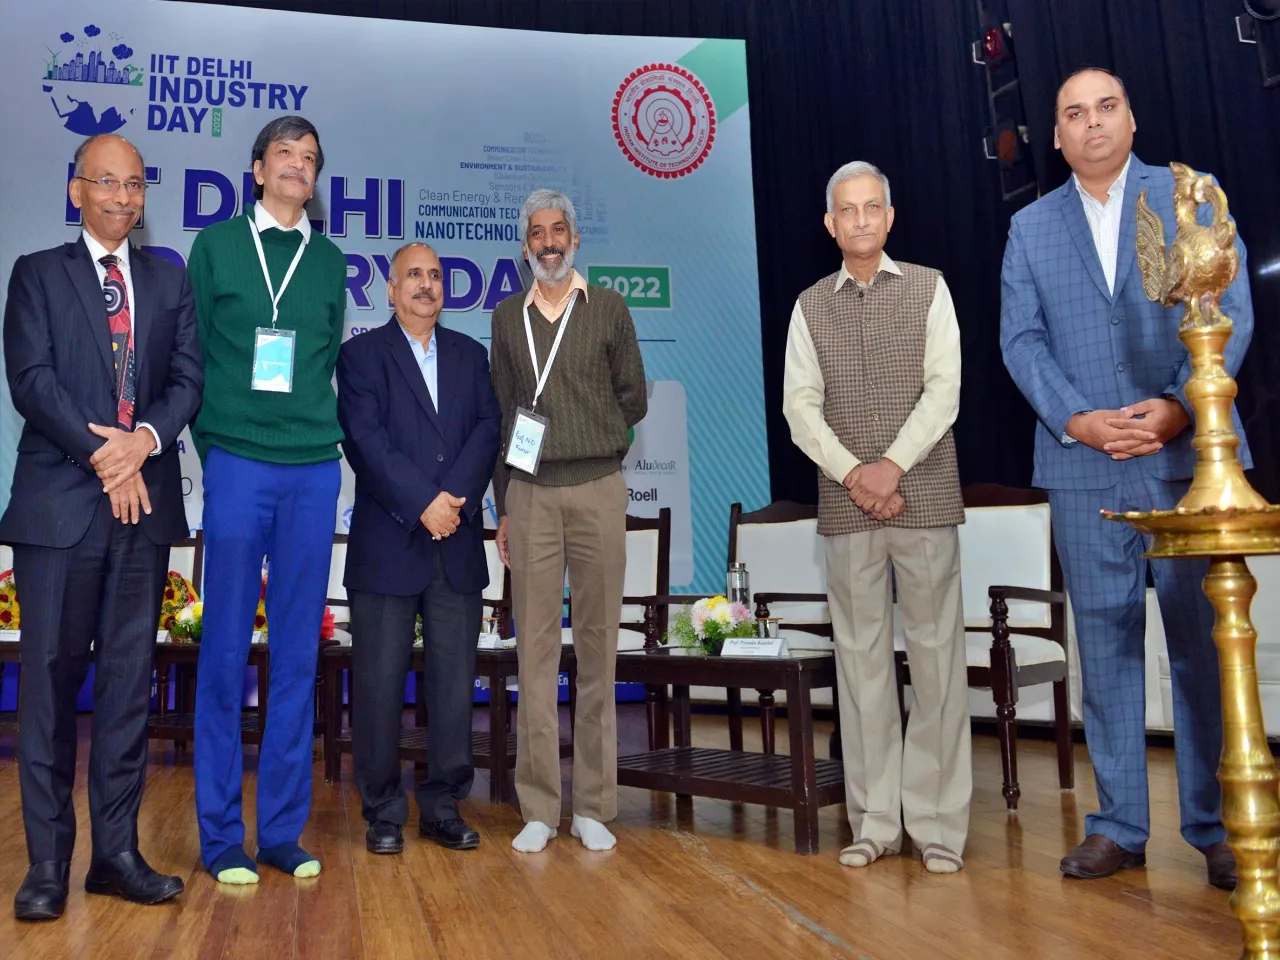 IIT Delhi researchers demonstrate 80+ cutting-edge technologies